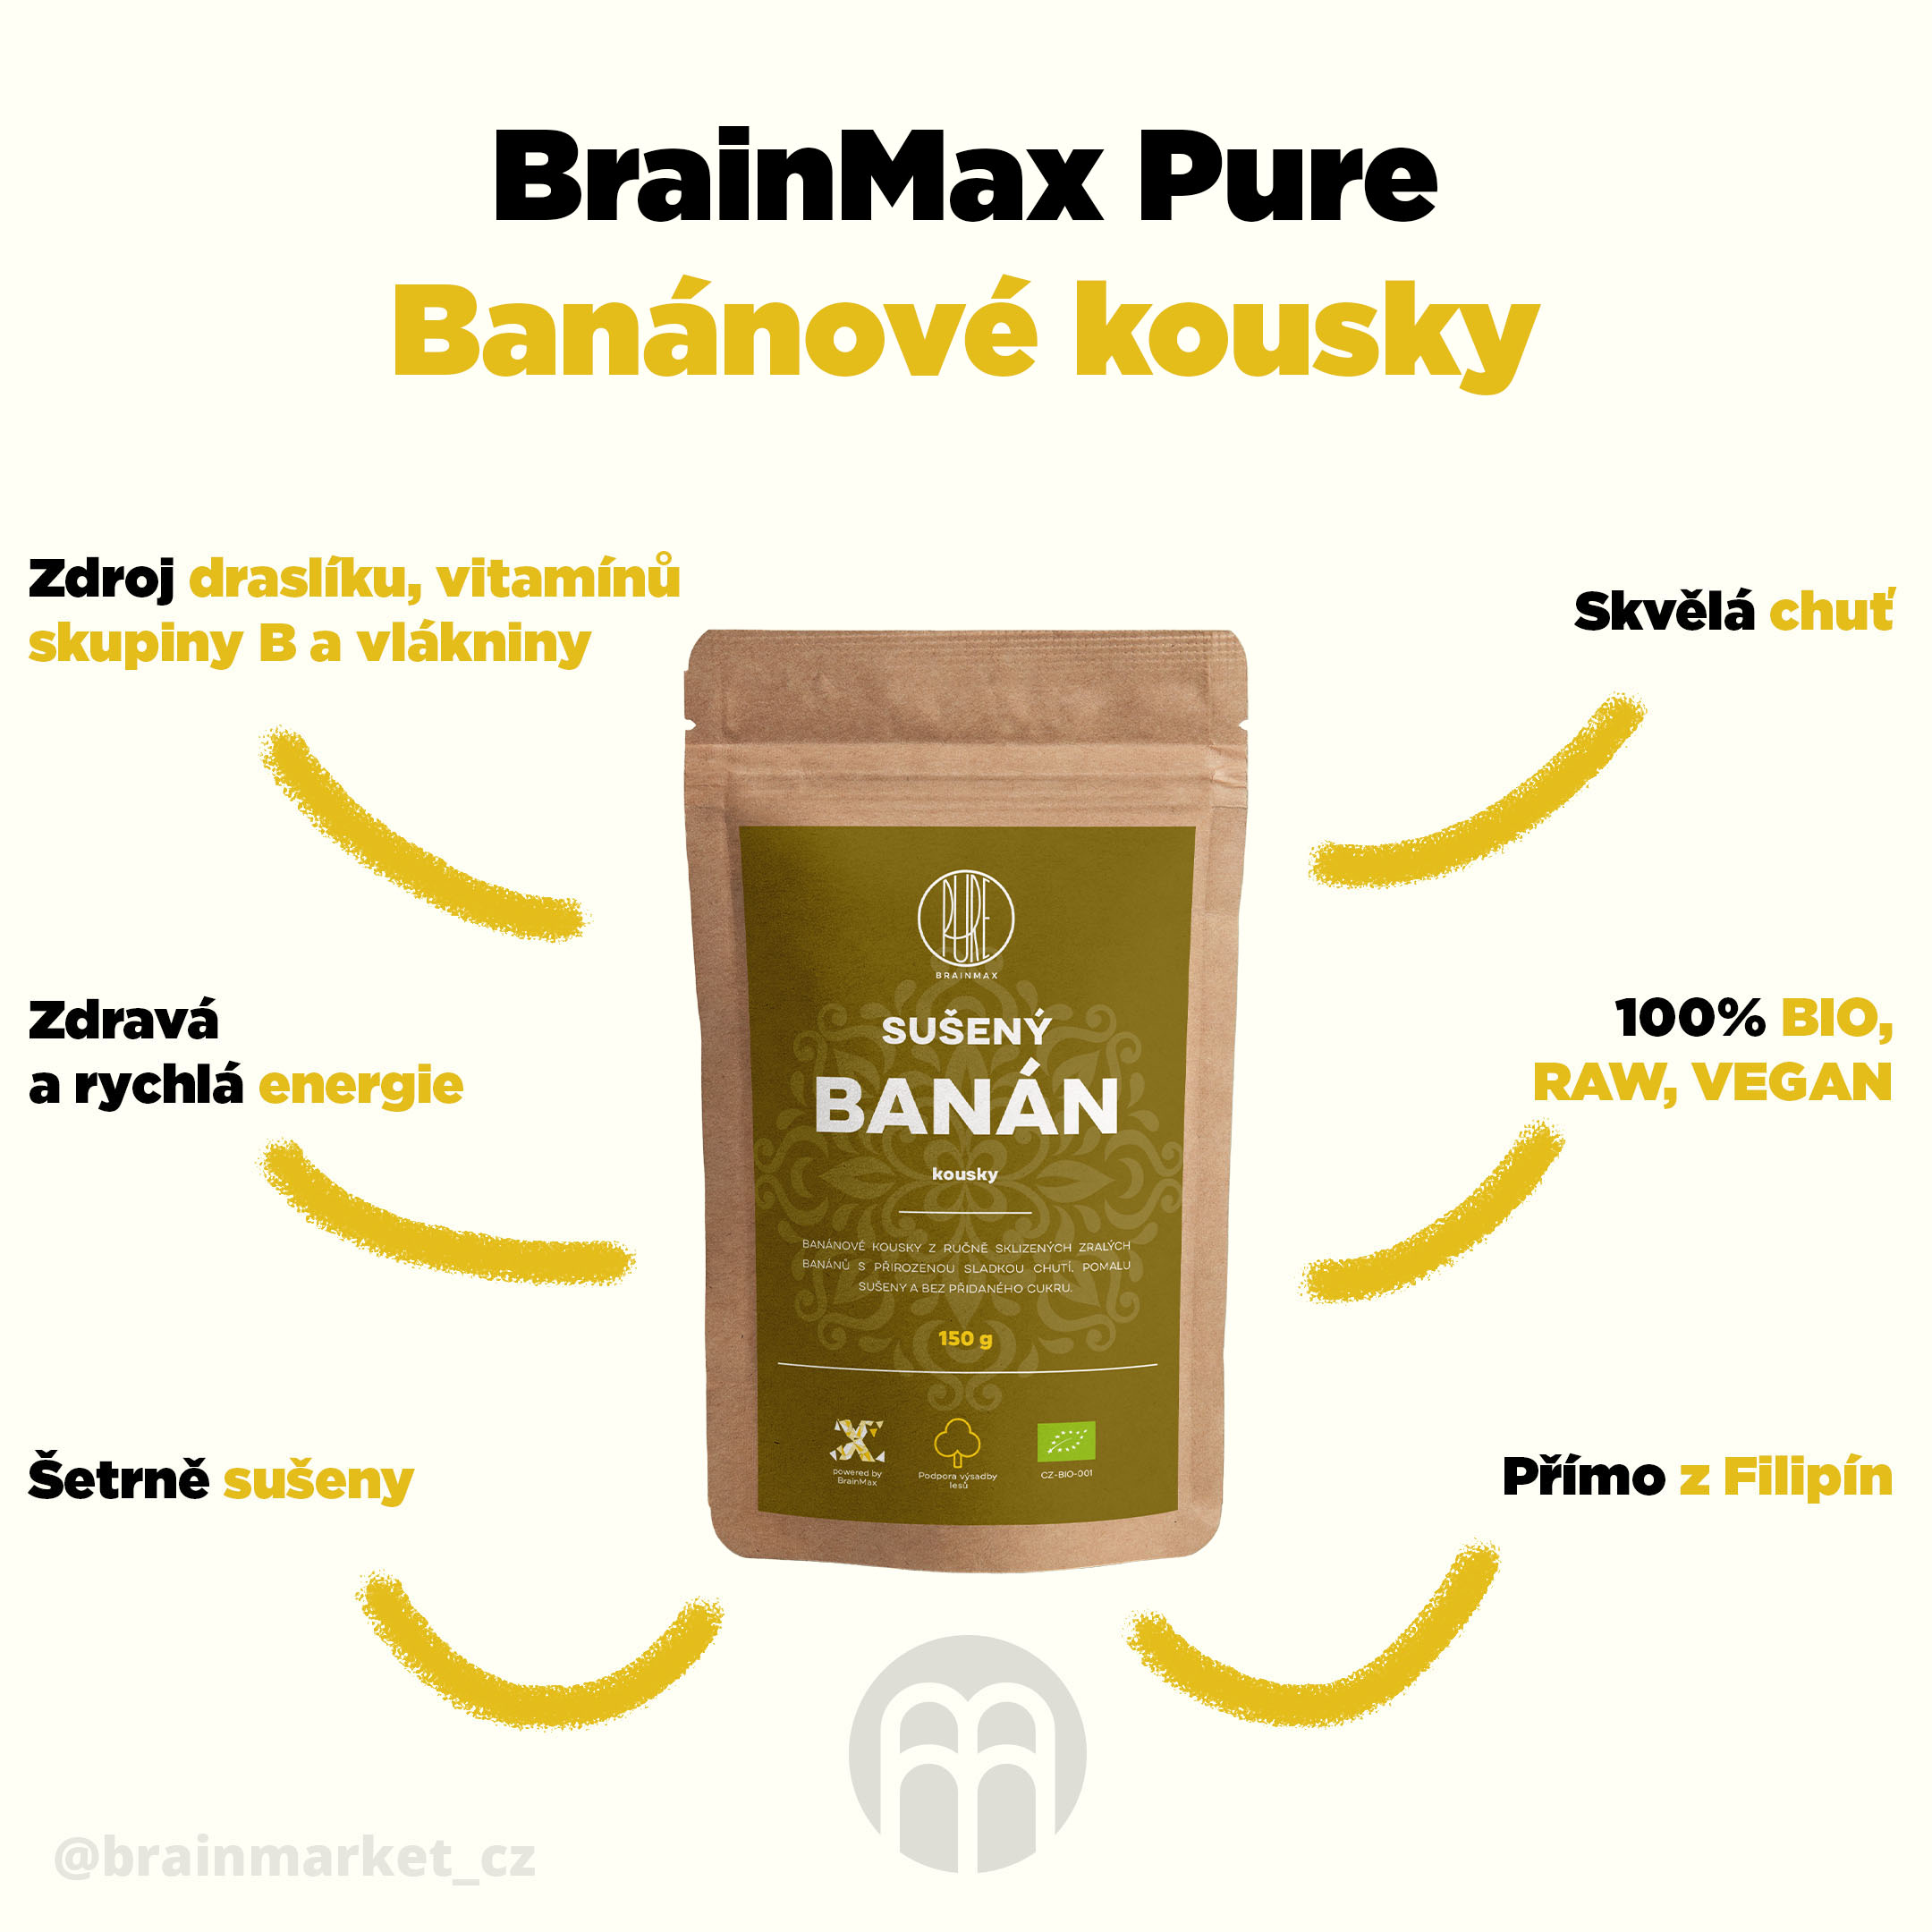 BrainMax Pure banánové kousky sušene - BrainMarket.cz